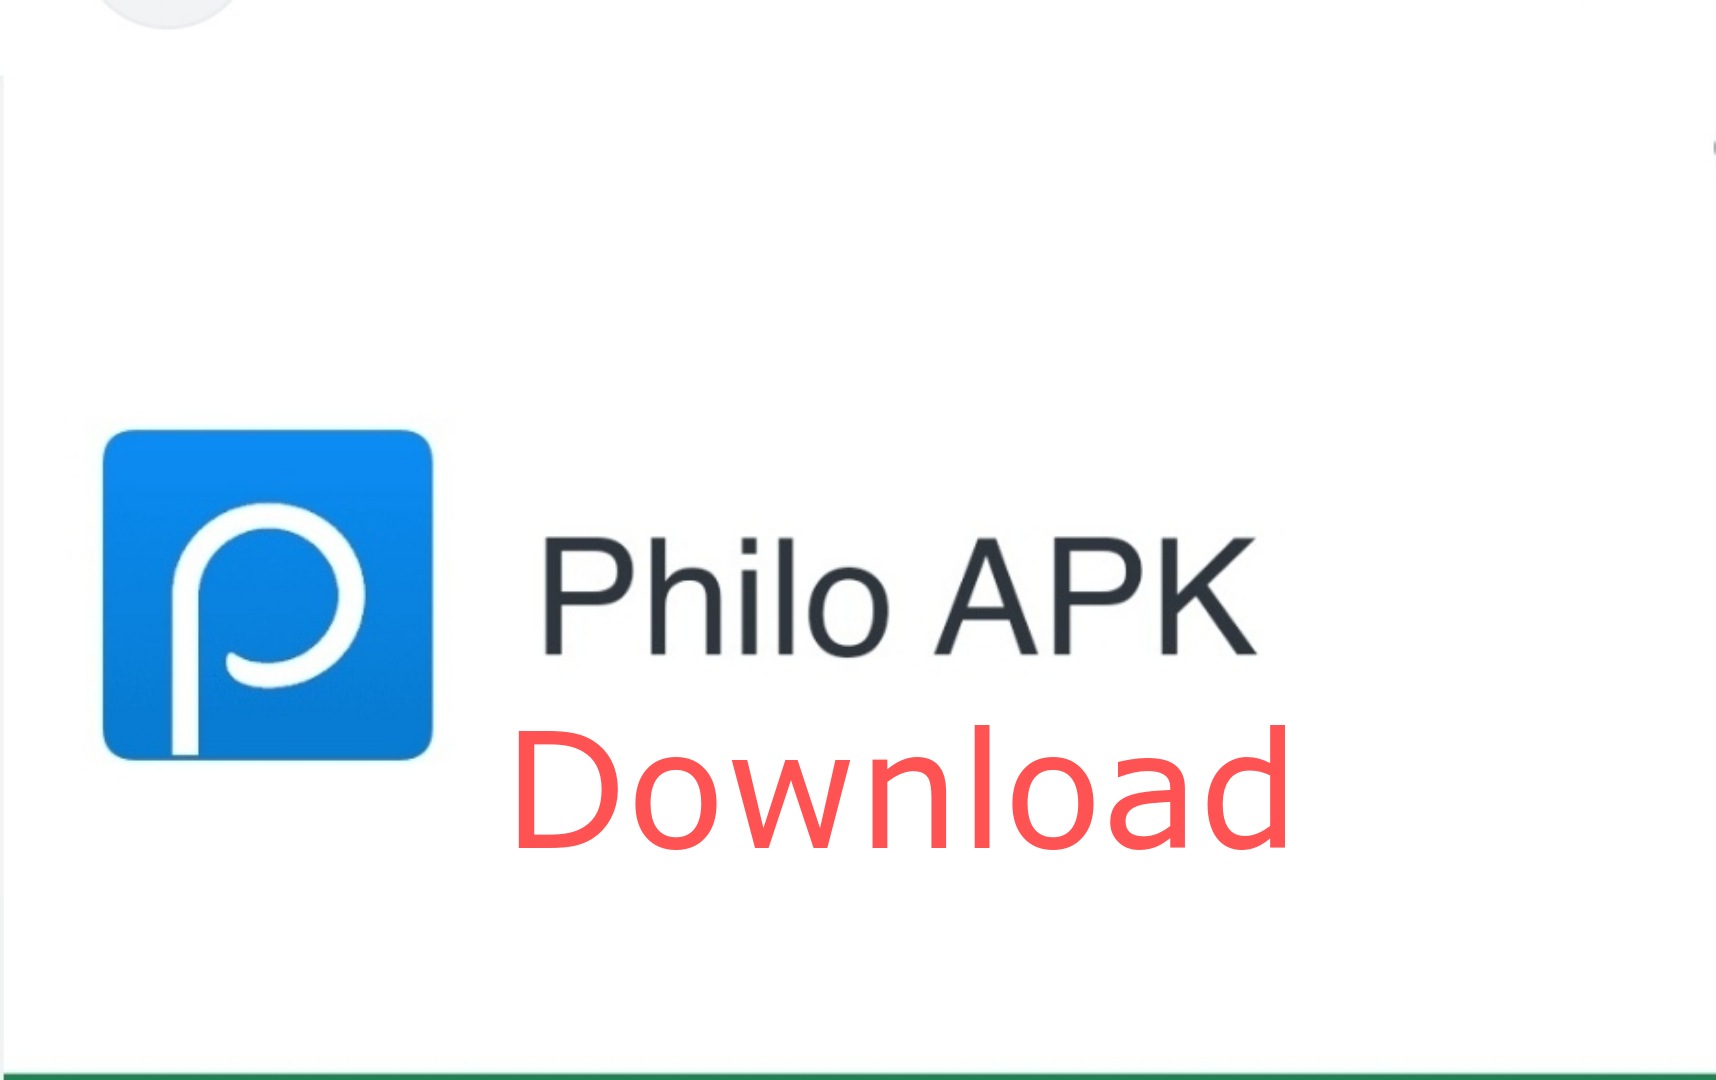 Philo APK download